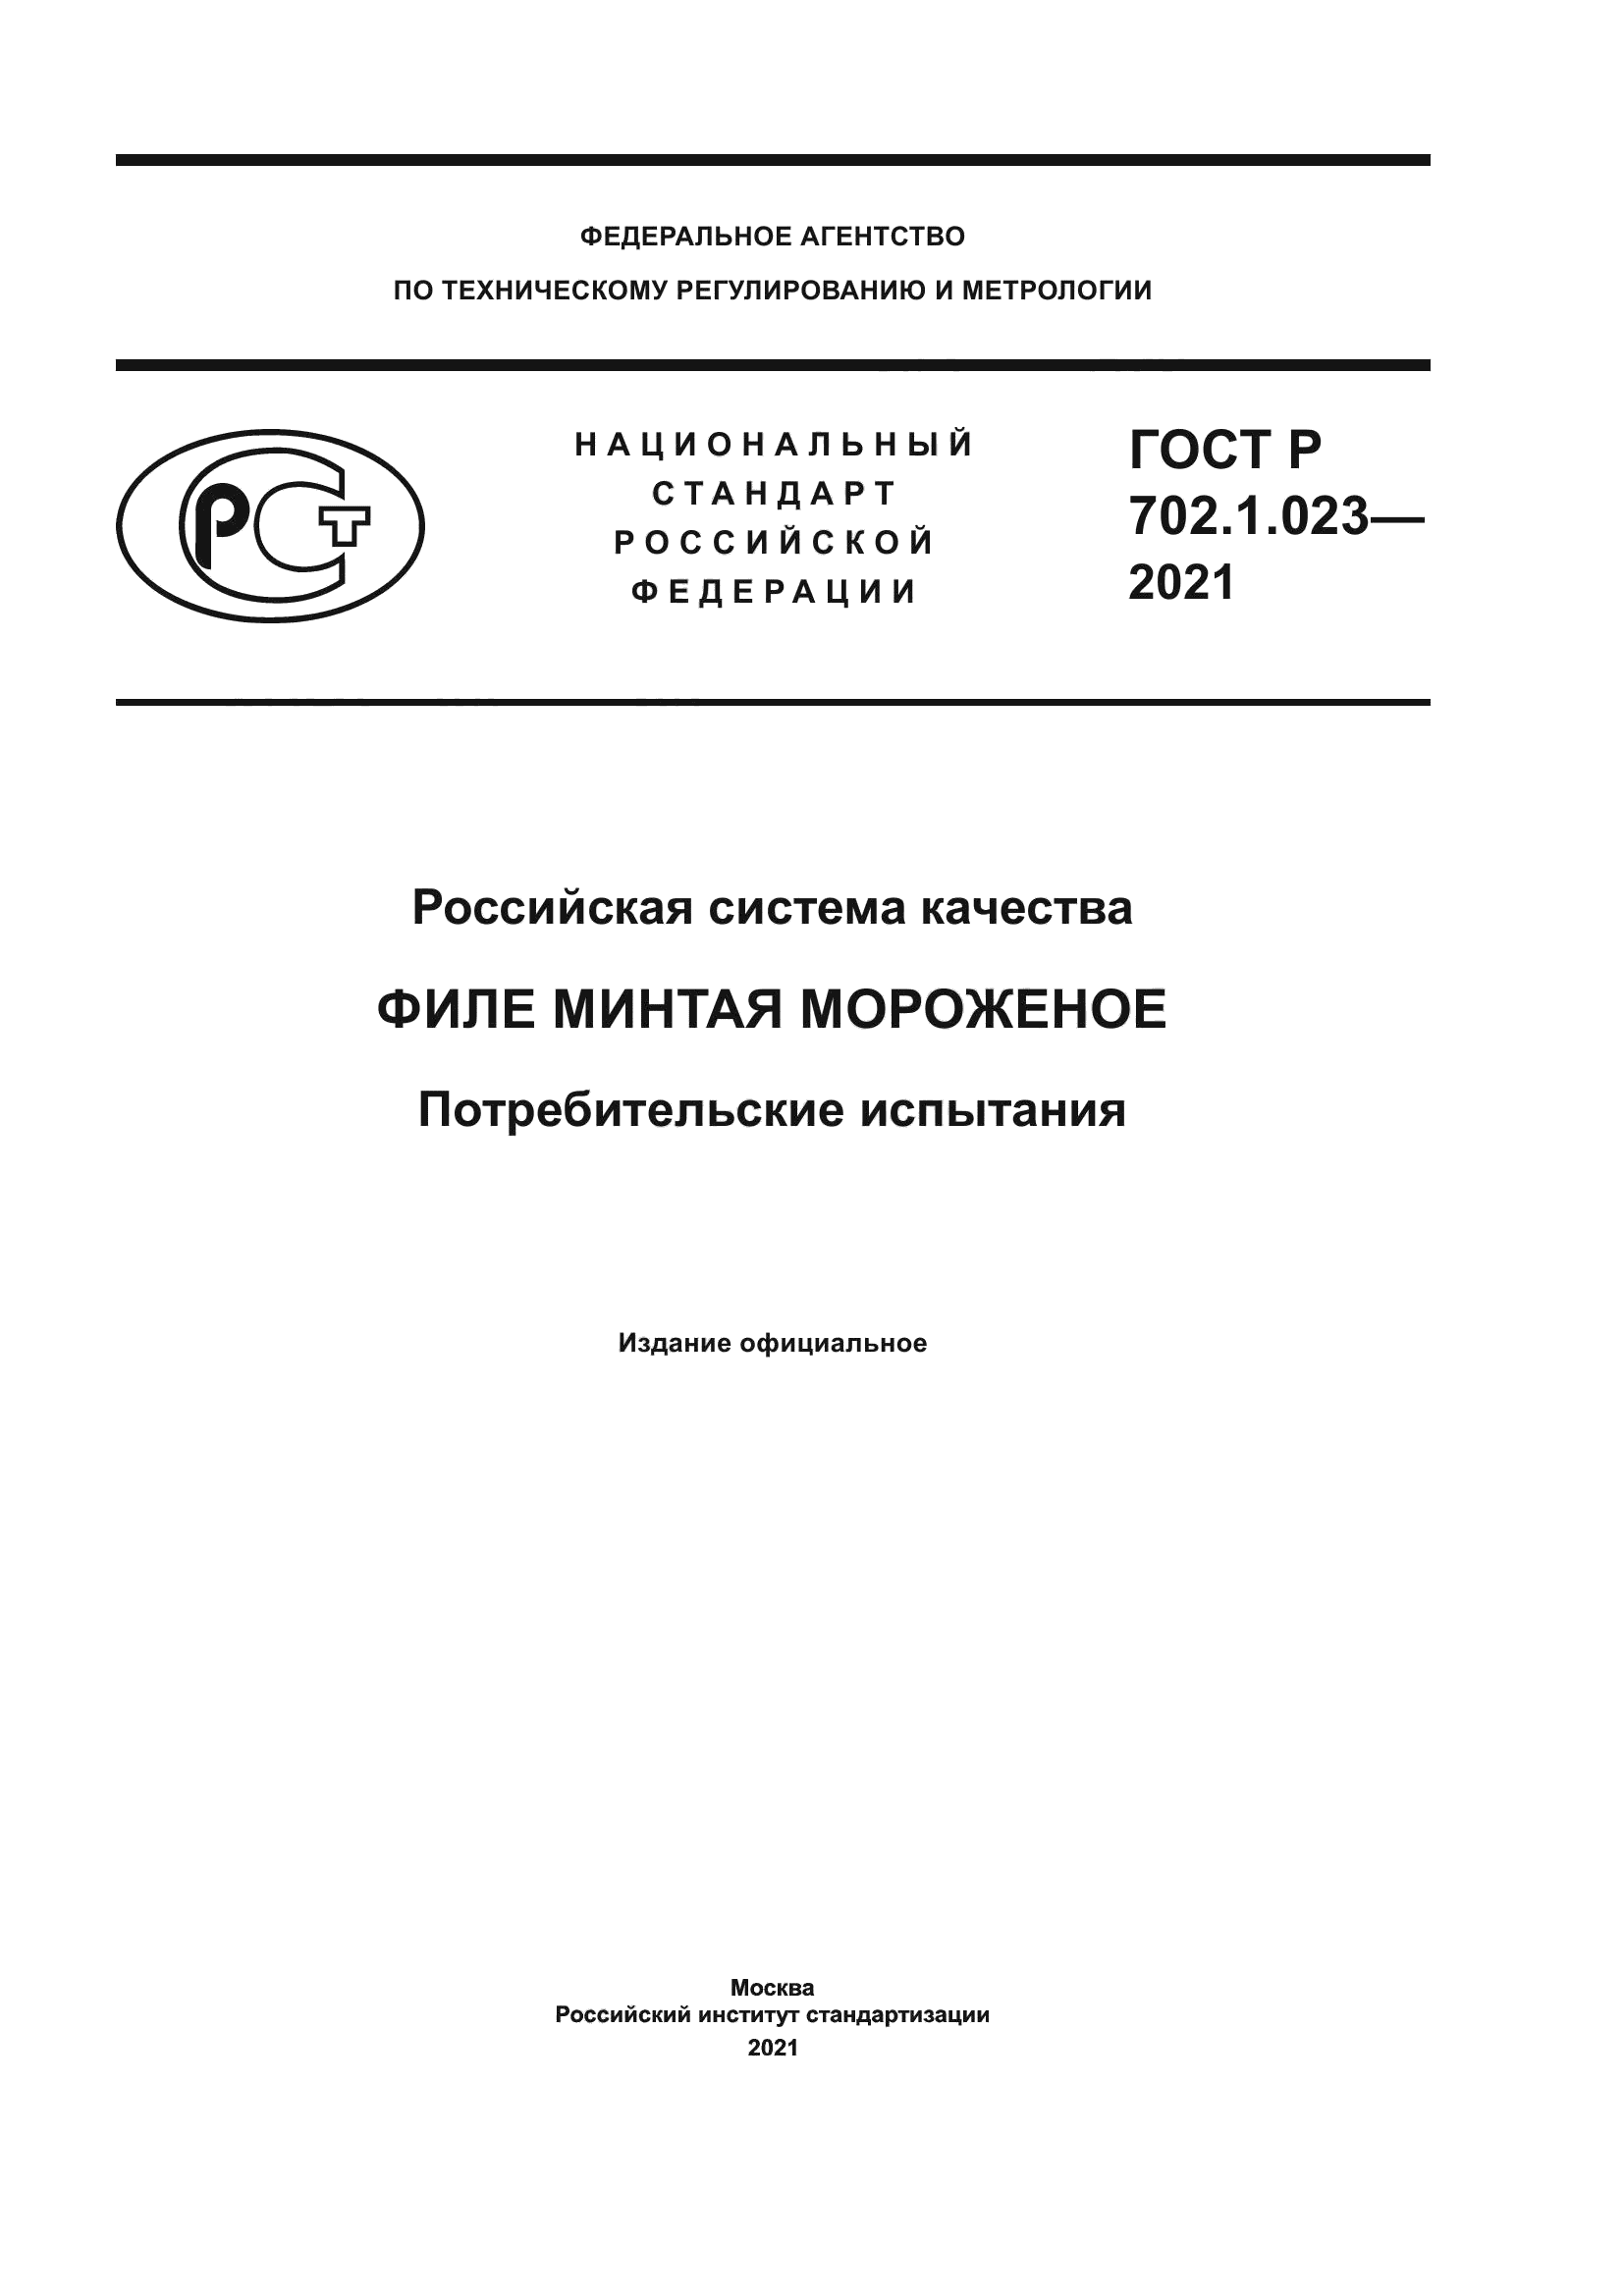 ГОСТ Р 702.1.023-2021